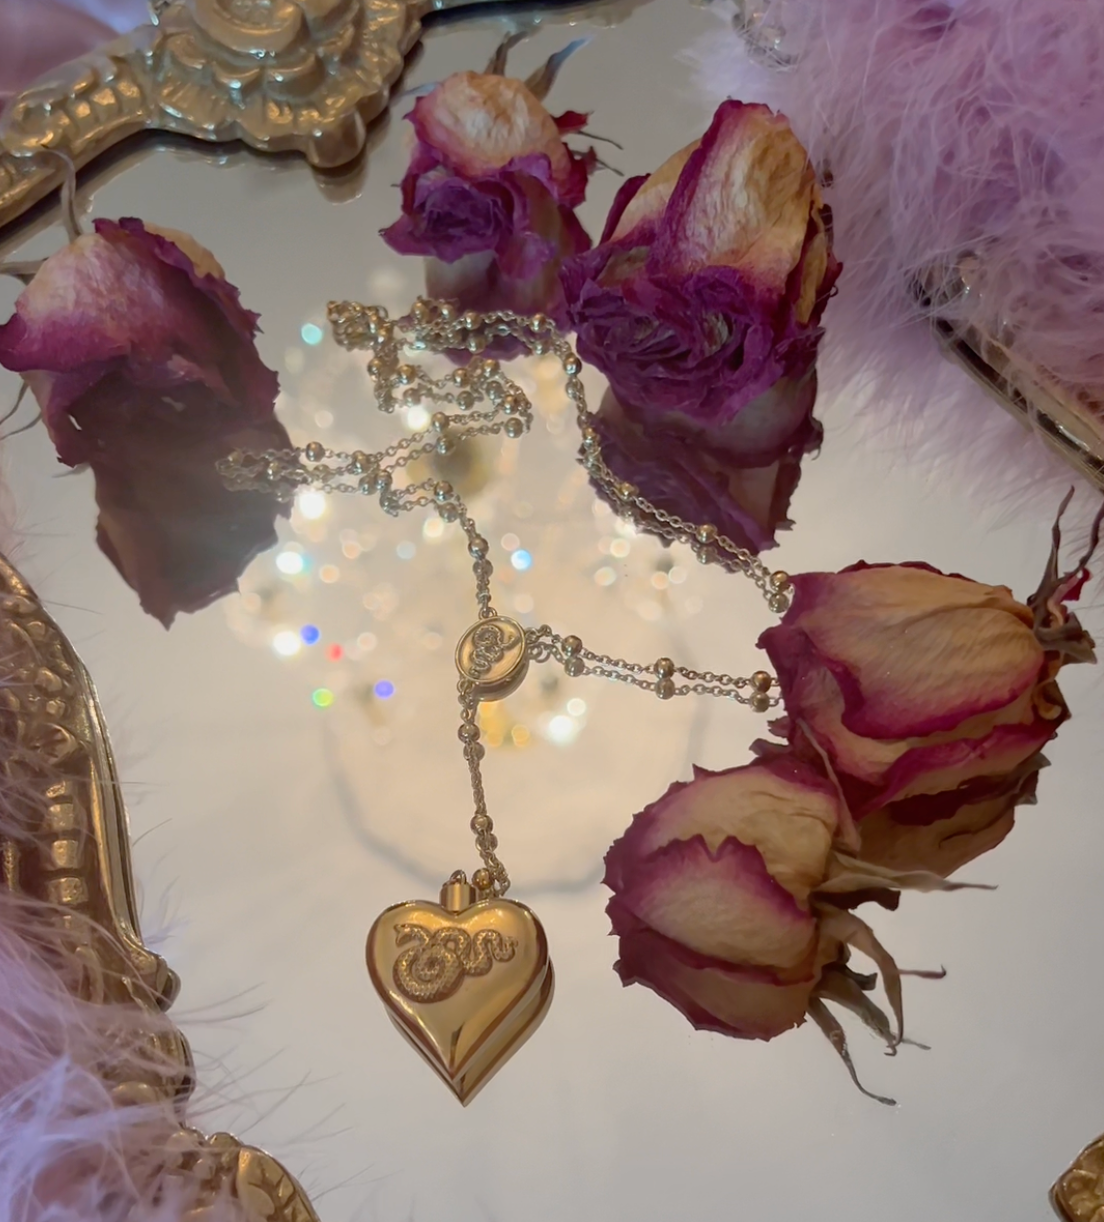 Stash Necklace 2.0 - Del Rey Ldr Inspired Heart Black Titanium